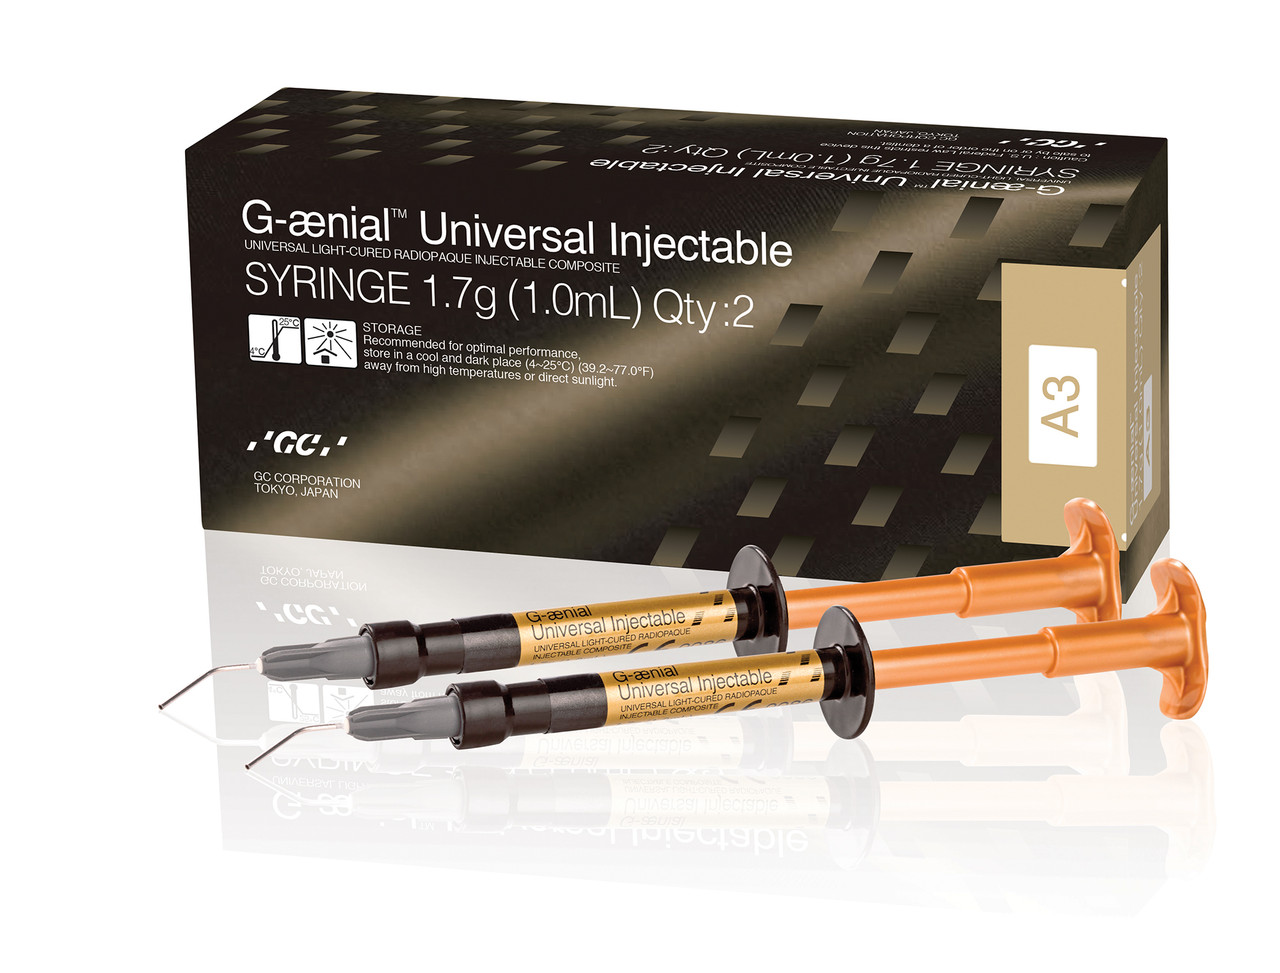 G-aenial Universal Injectable Unitips 15 x 0.16mL B1